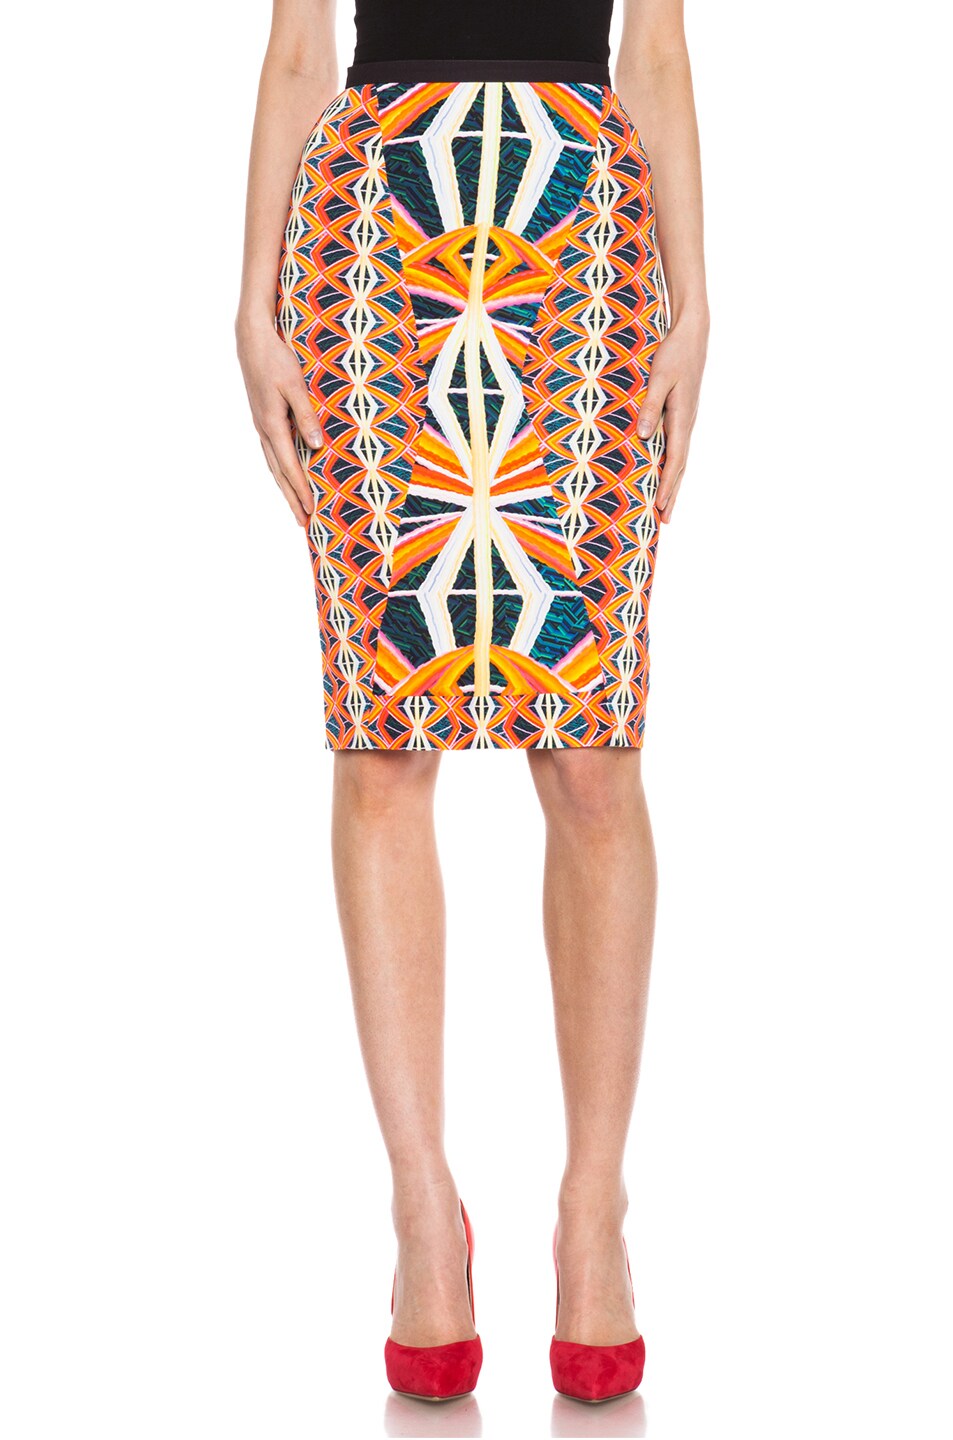 Peter Pilotto H Viscose-Blend Skirt in Ikeru Orange | FWRD